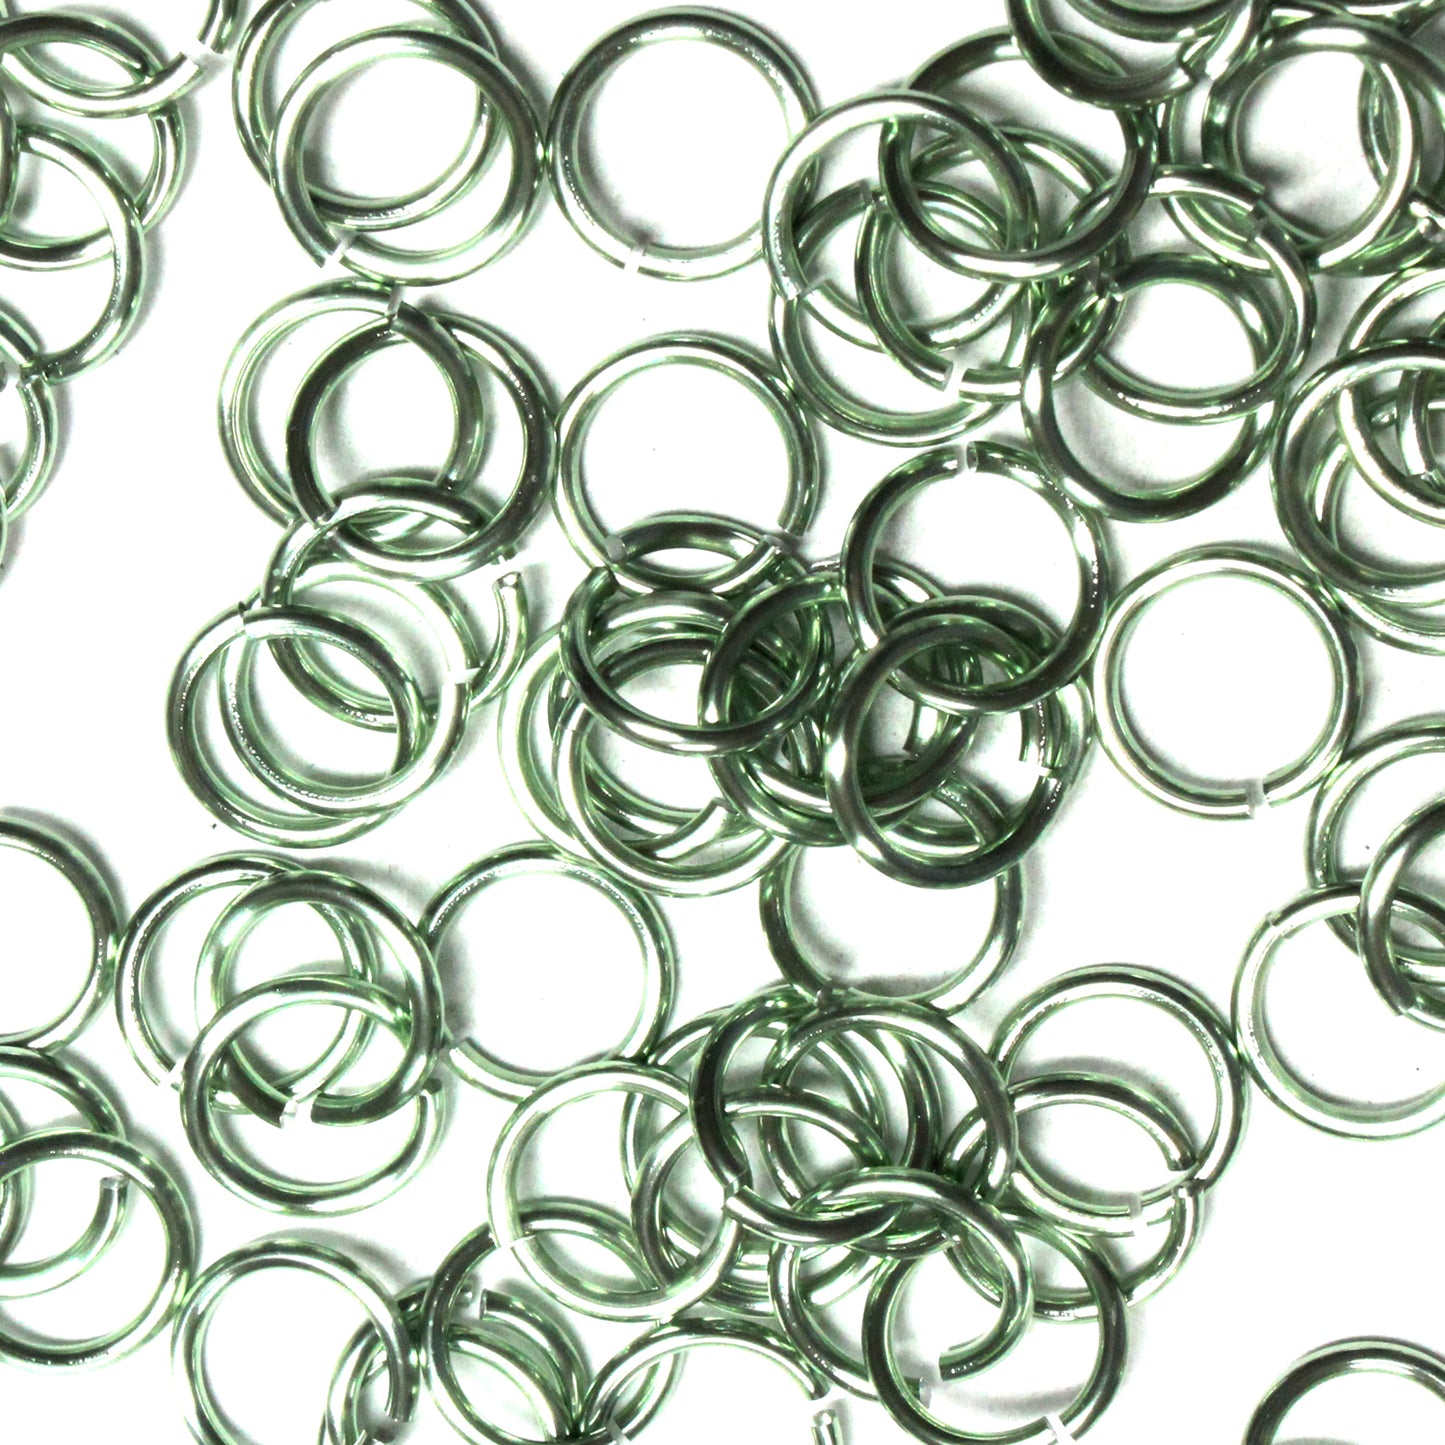 SHINY SEAFOAM GREEN 7mm 16 GA AWG Jump Rings / 5 Gram Pack (approx 70) / sawcut round open anodized aluminum